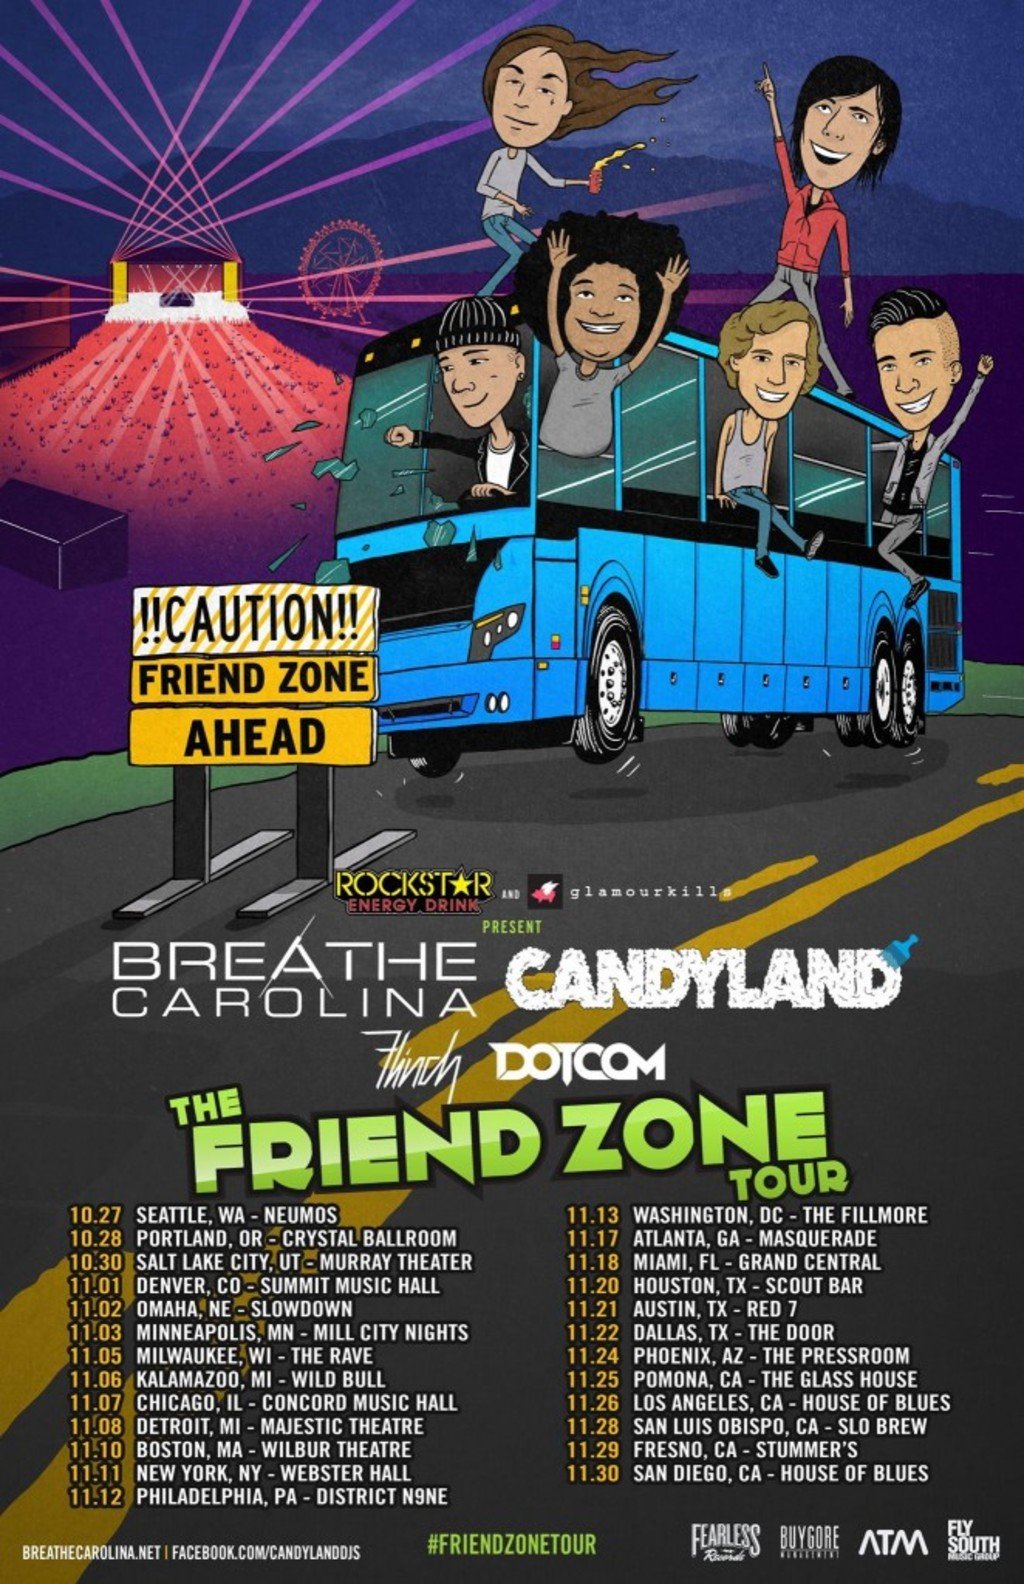 Breathe Carolina "The Friend Zone Tour"